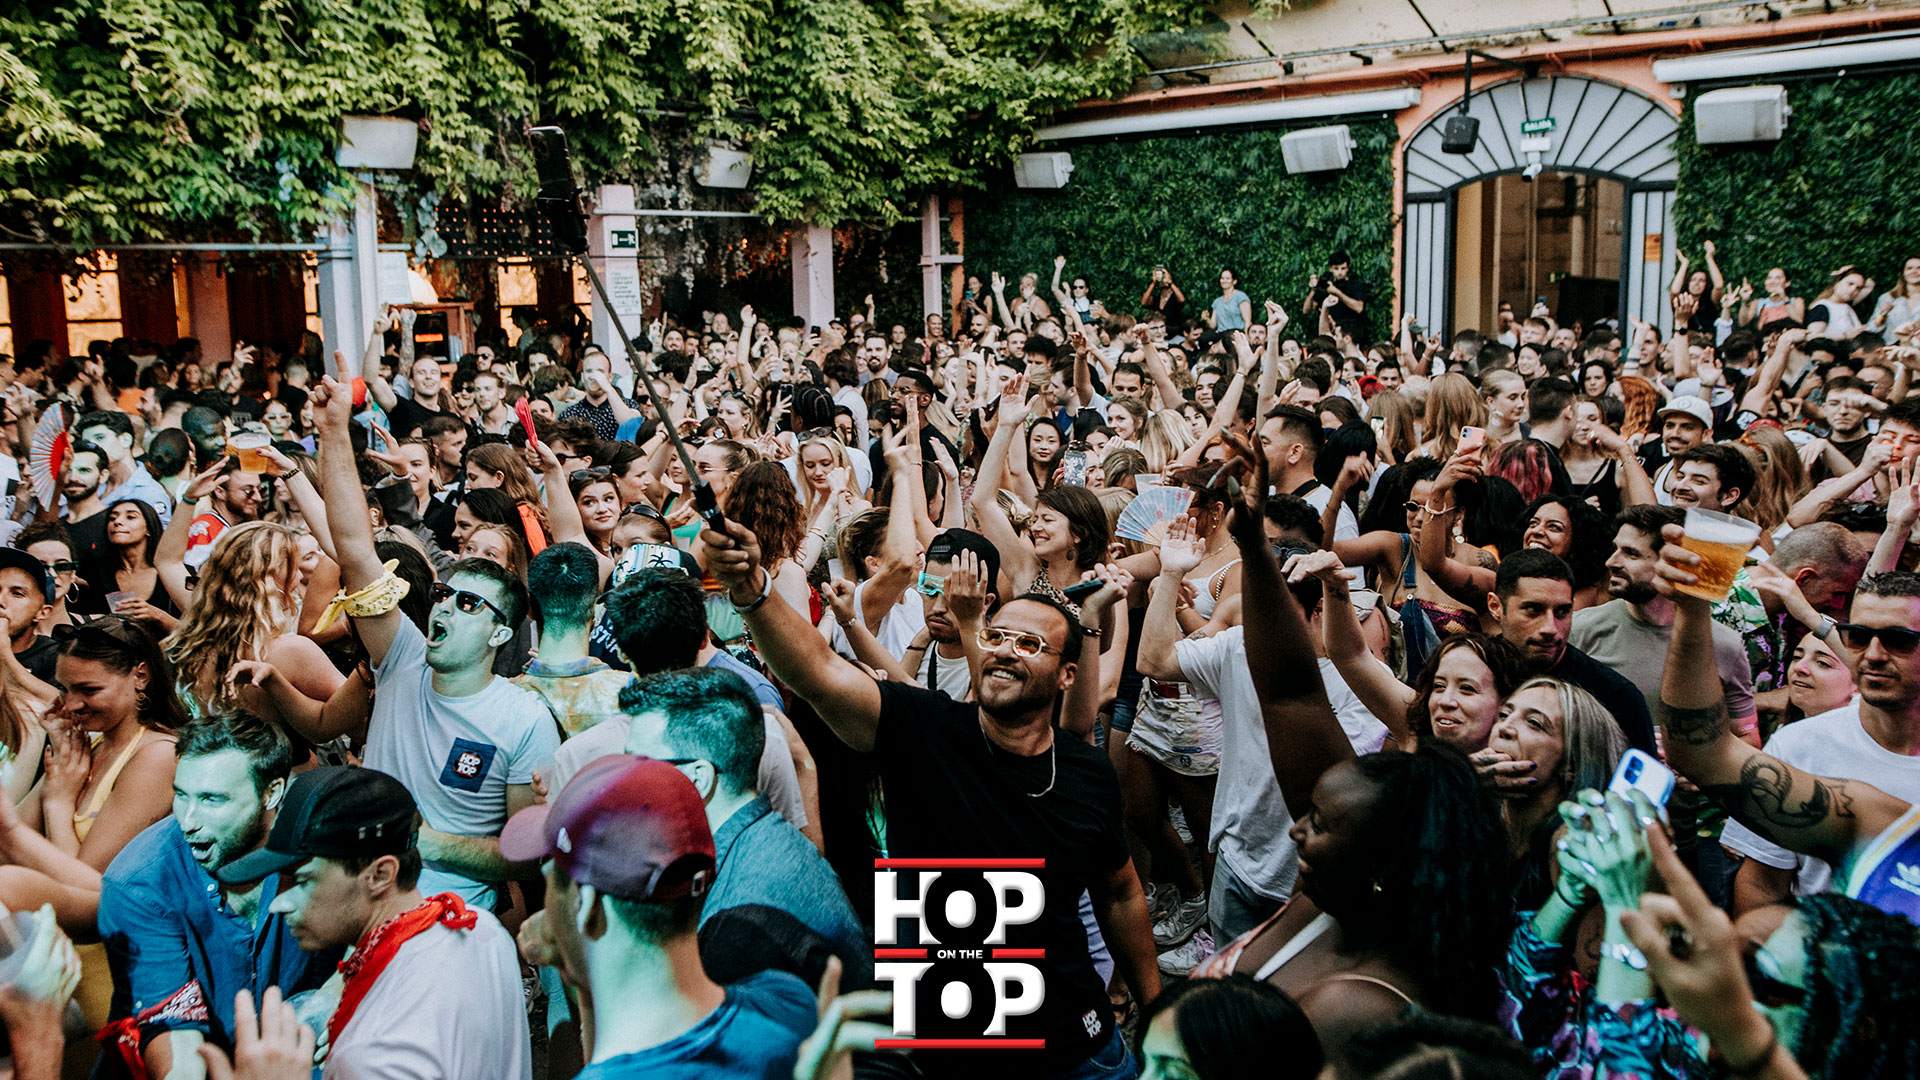 Hop on The Top Open Air pres: Hip Hop Throwback 90'-00' at La Terrrazza - フライヤー表